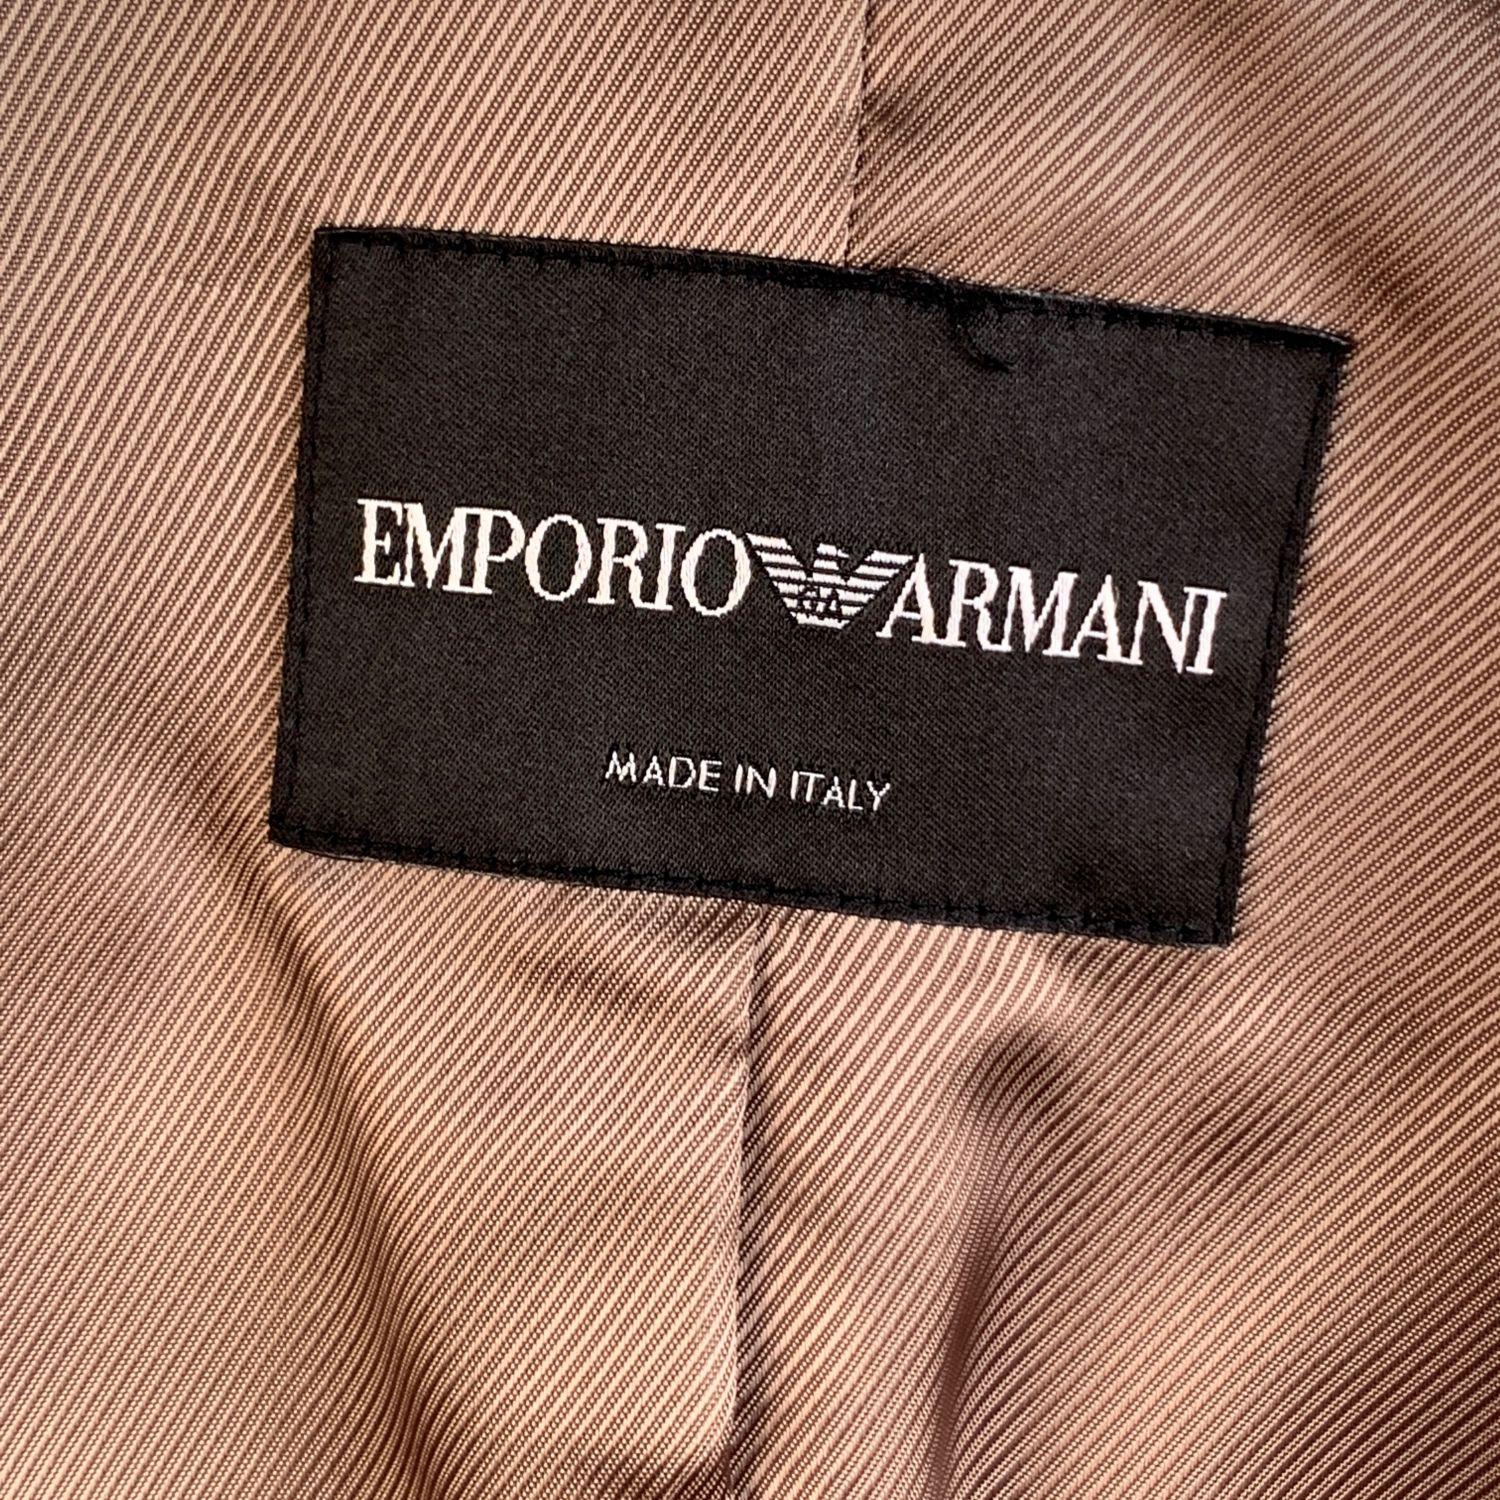 Emporio Armani Beige Pure Cashmere Jacket Size 42 IT 3